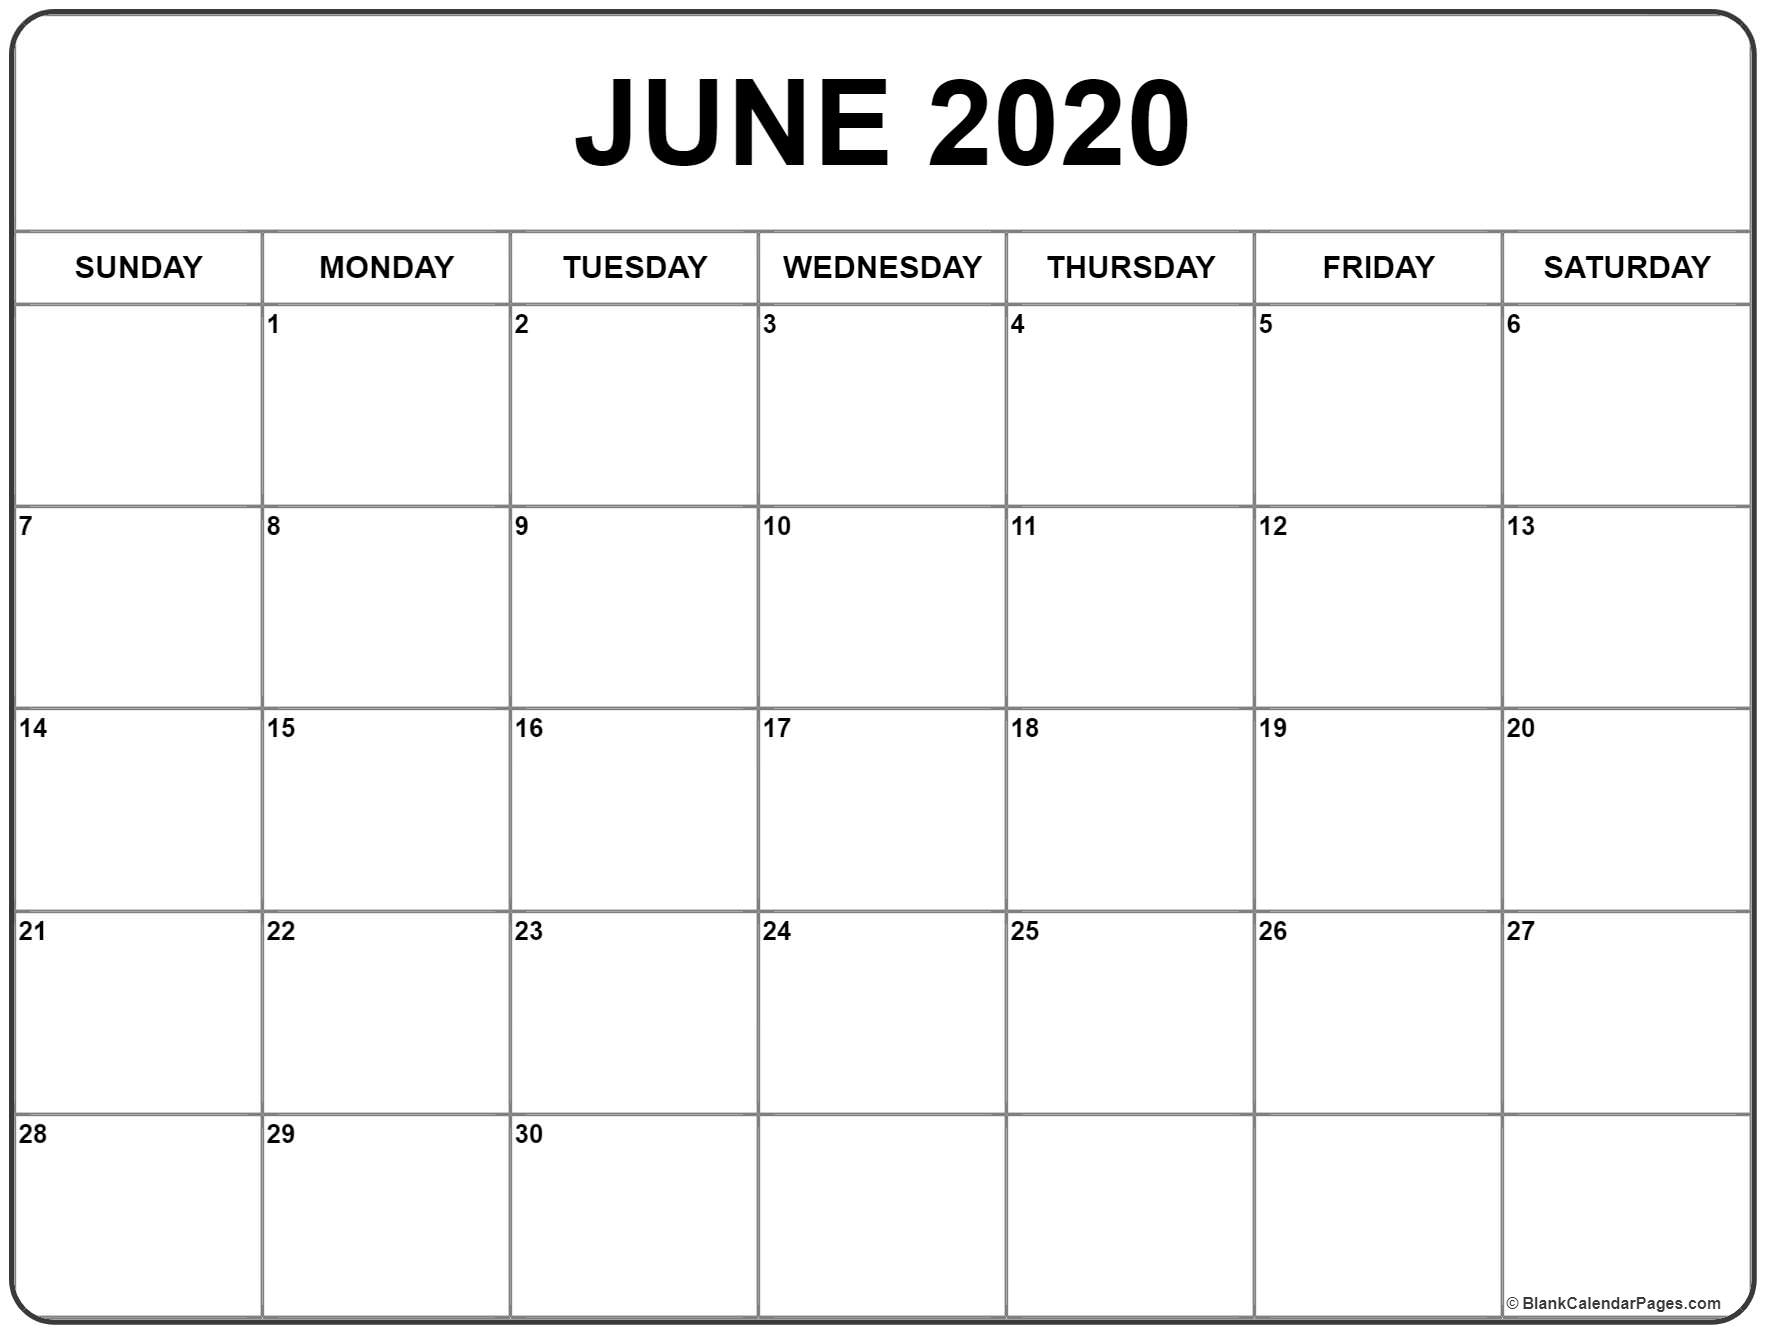 June 2020 Calendar | Free Printable Monthly Calendars 2020 Calendar For June